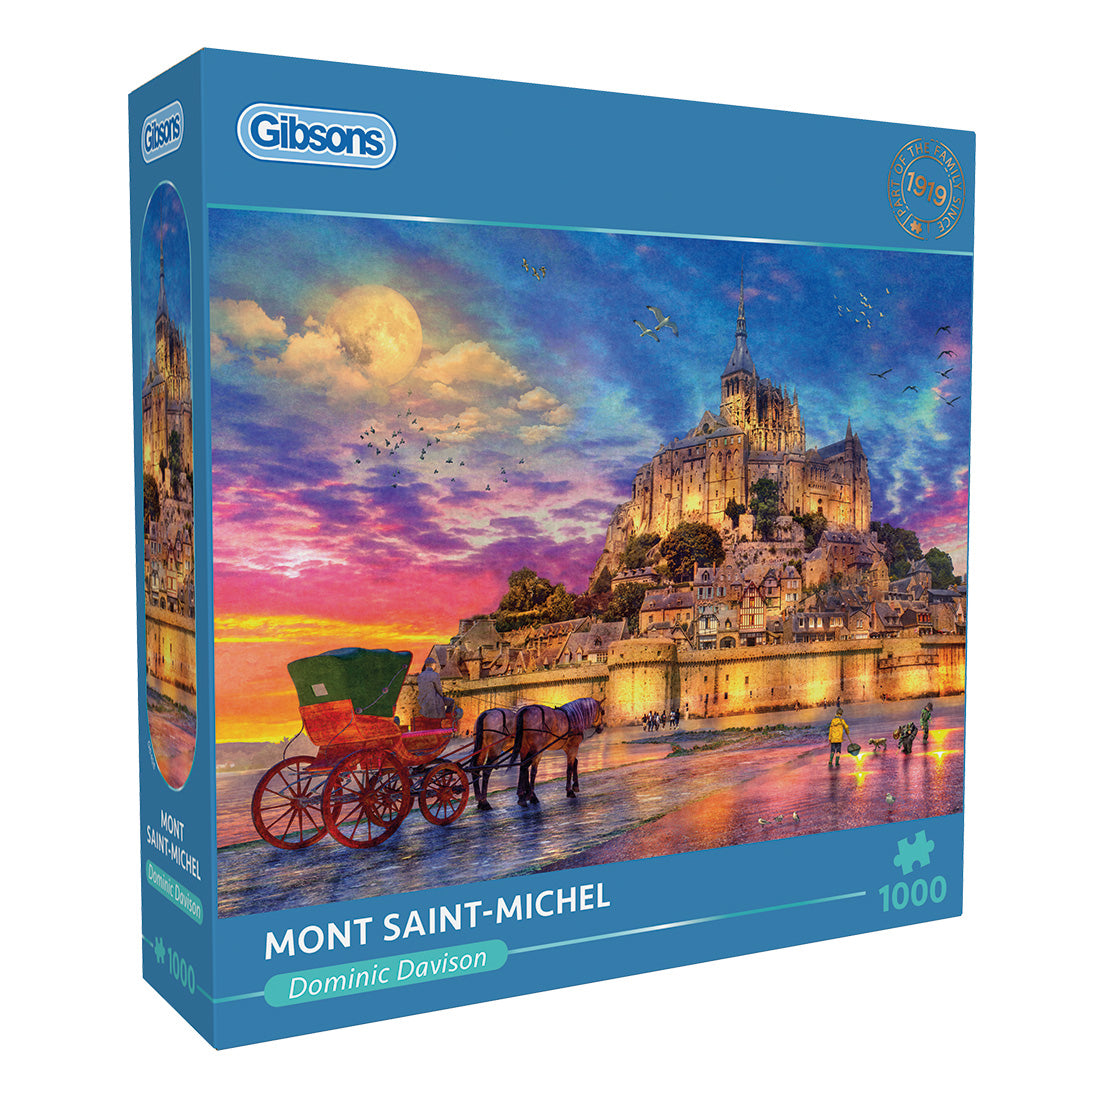 Gibsons - Mont Saint-Michel - 1000 Piece Jigsaw Puzzle